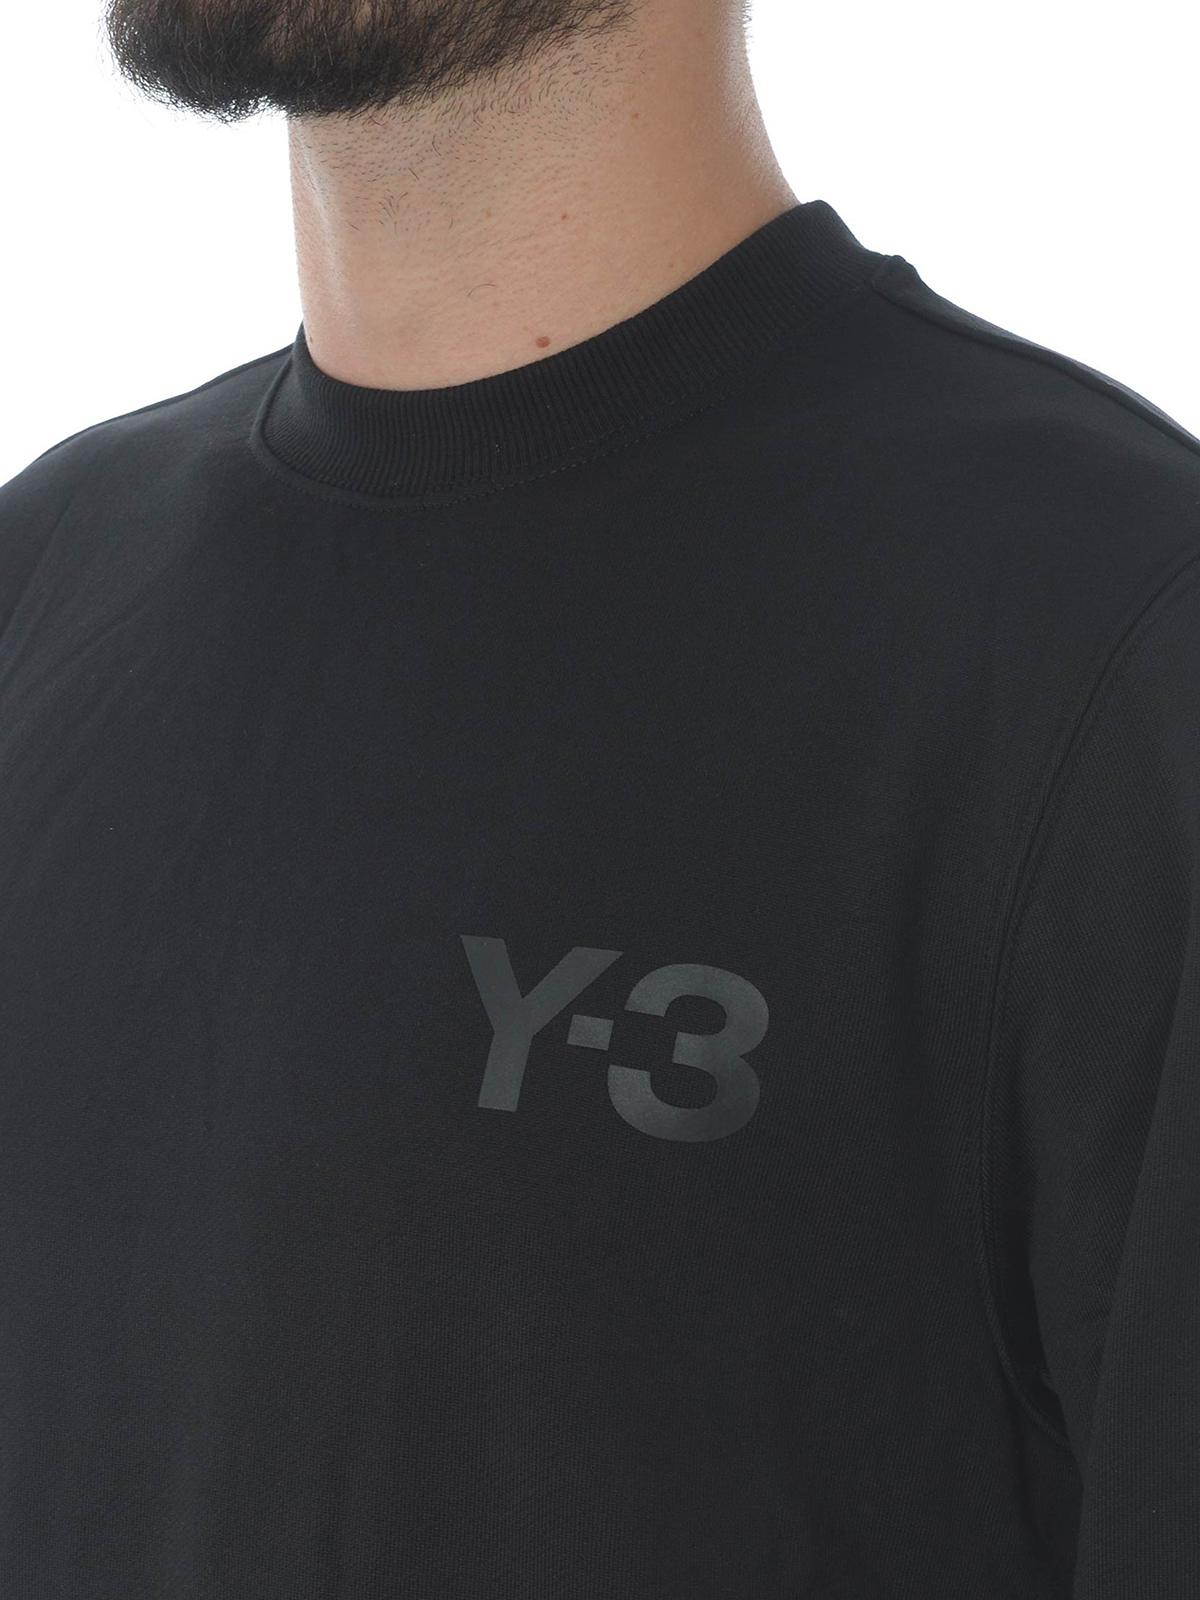 y3 sweatshirt